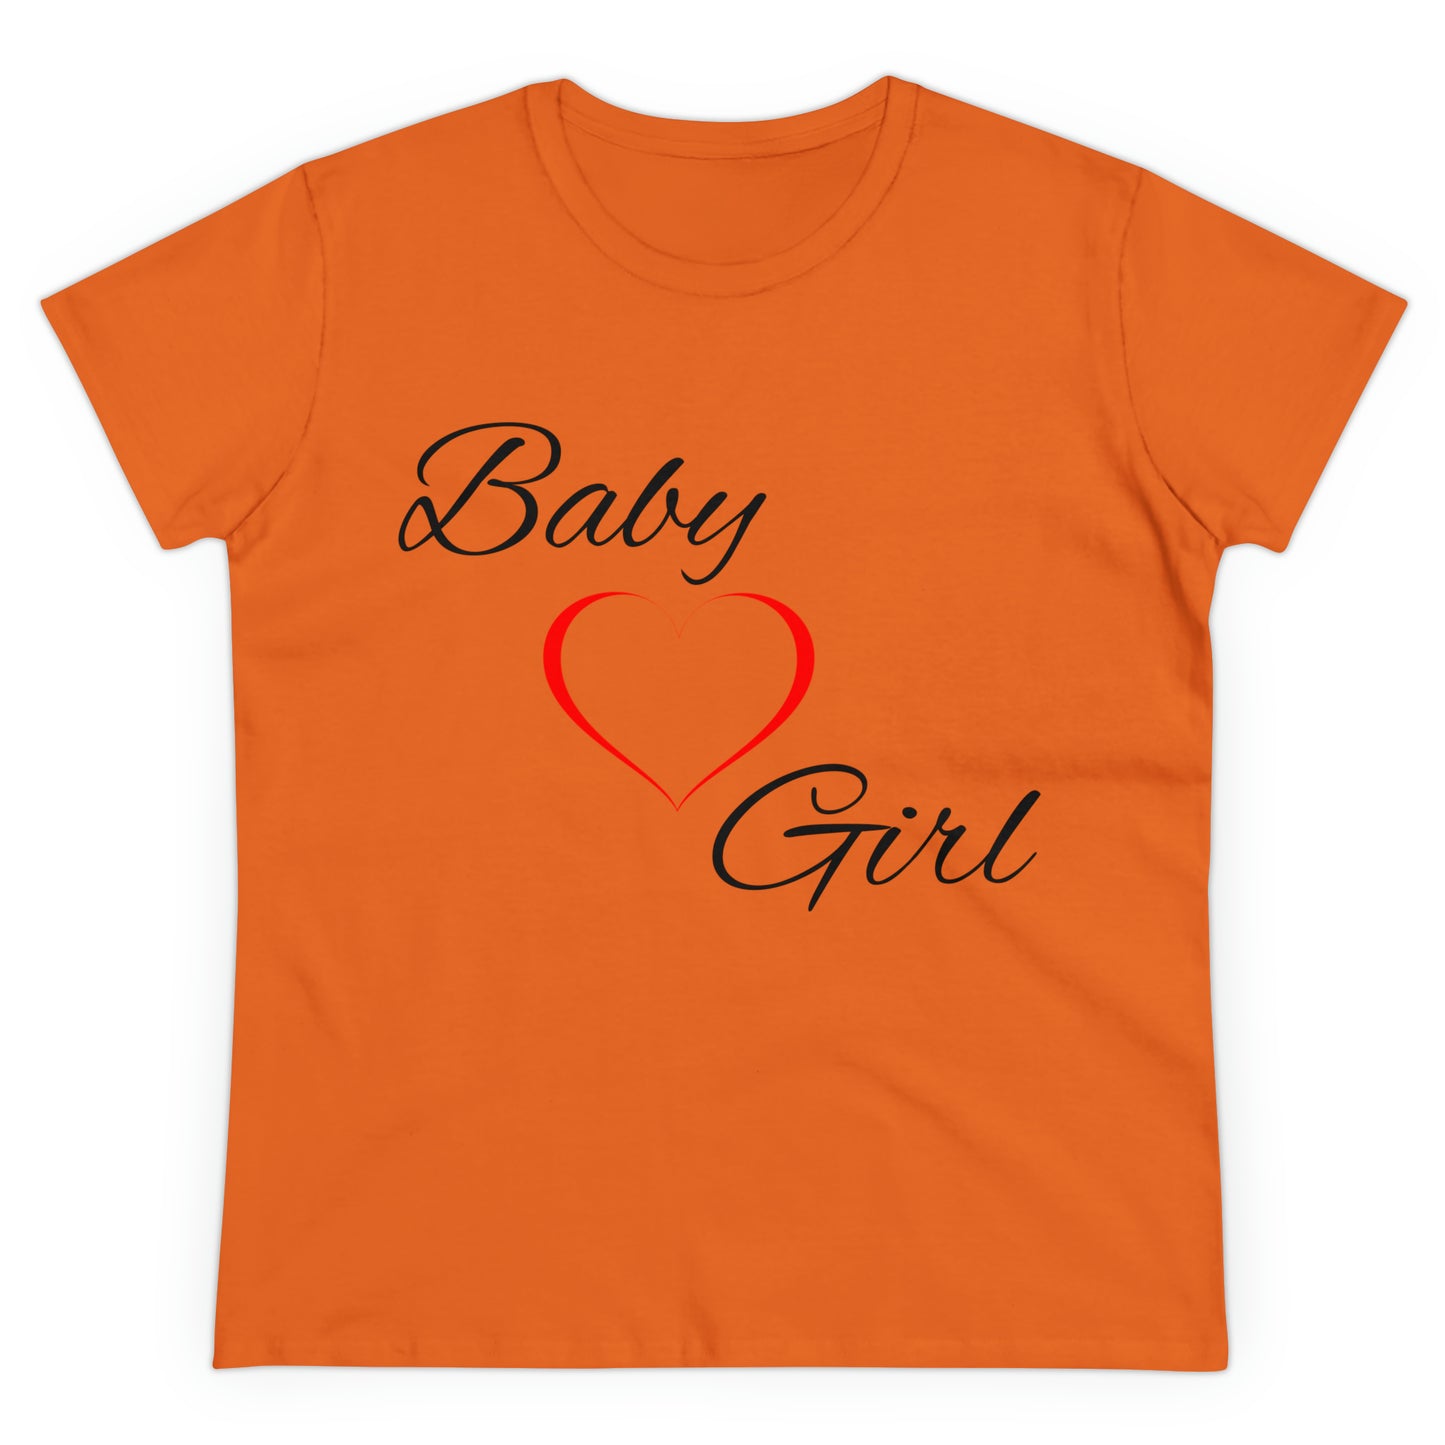 Baby Girl - Women's Midweight Cotton Tee